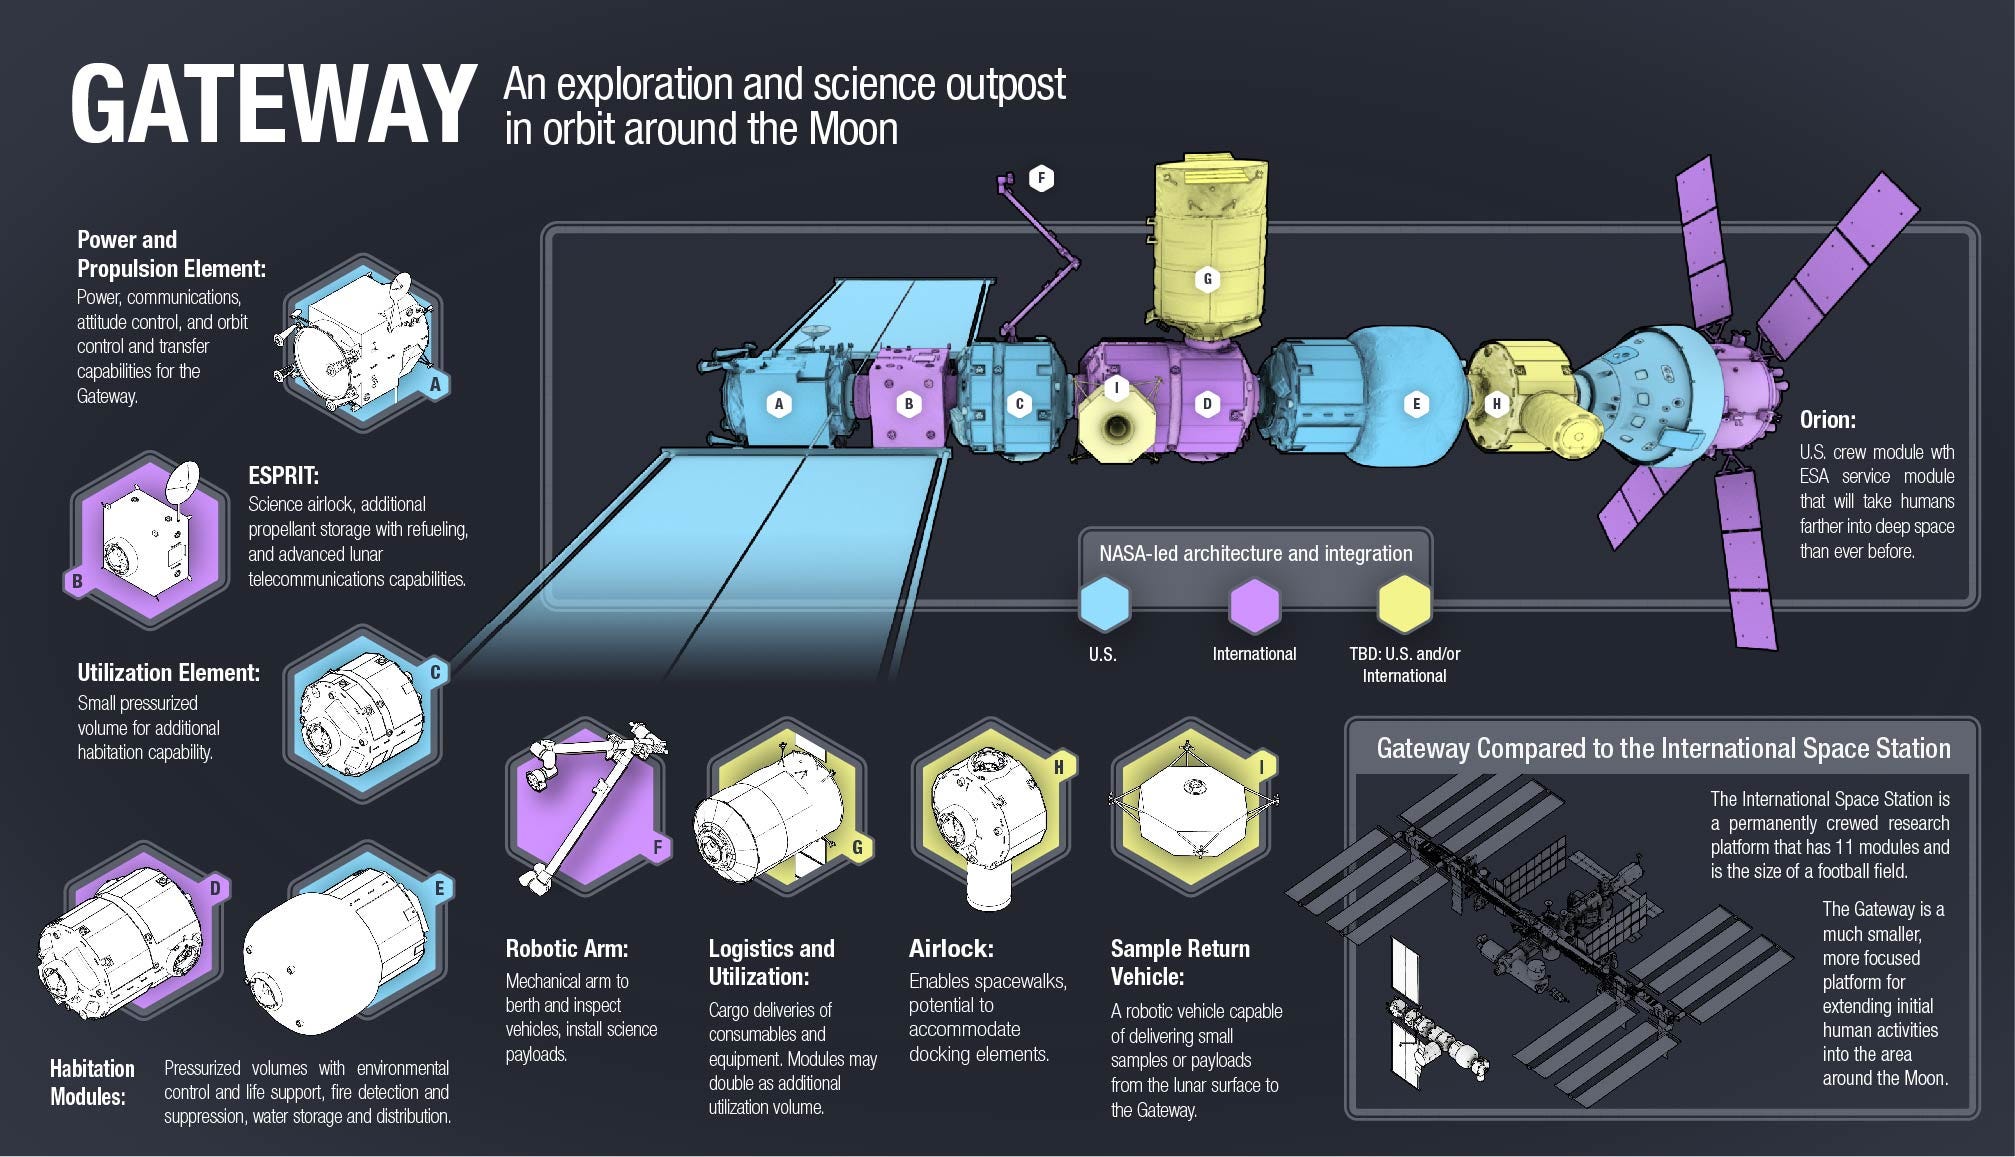 The Lunar Gateway towards a new scientific era